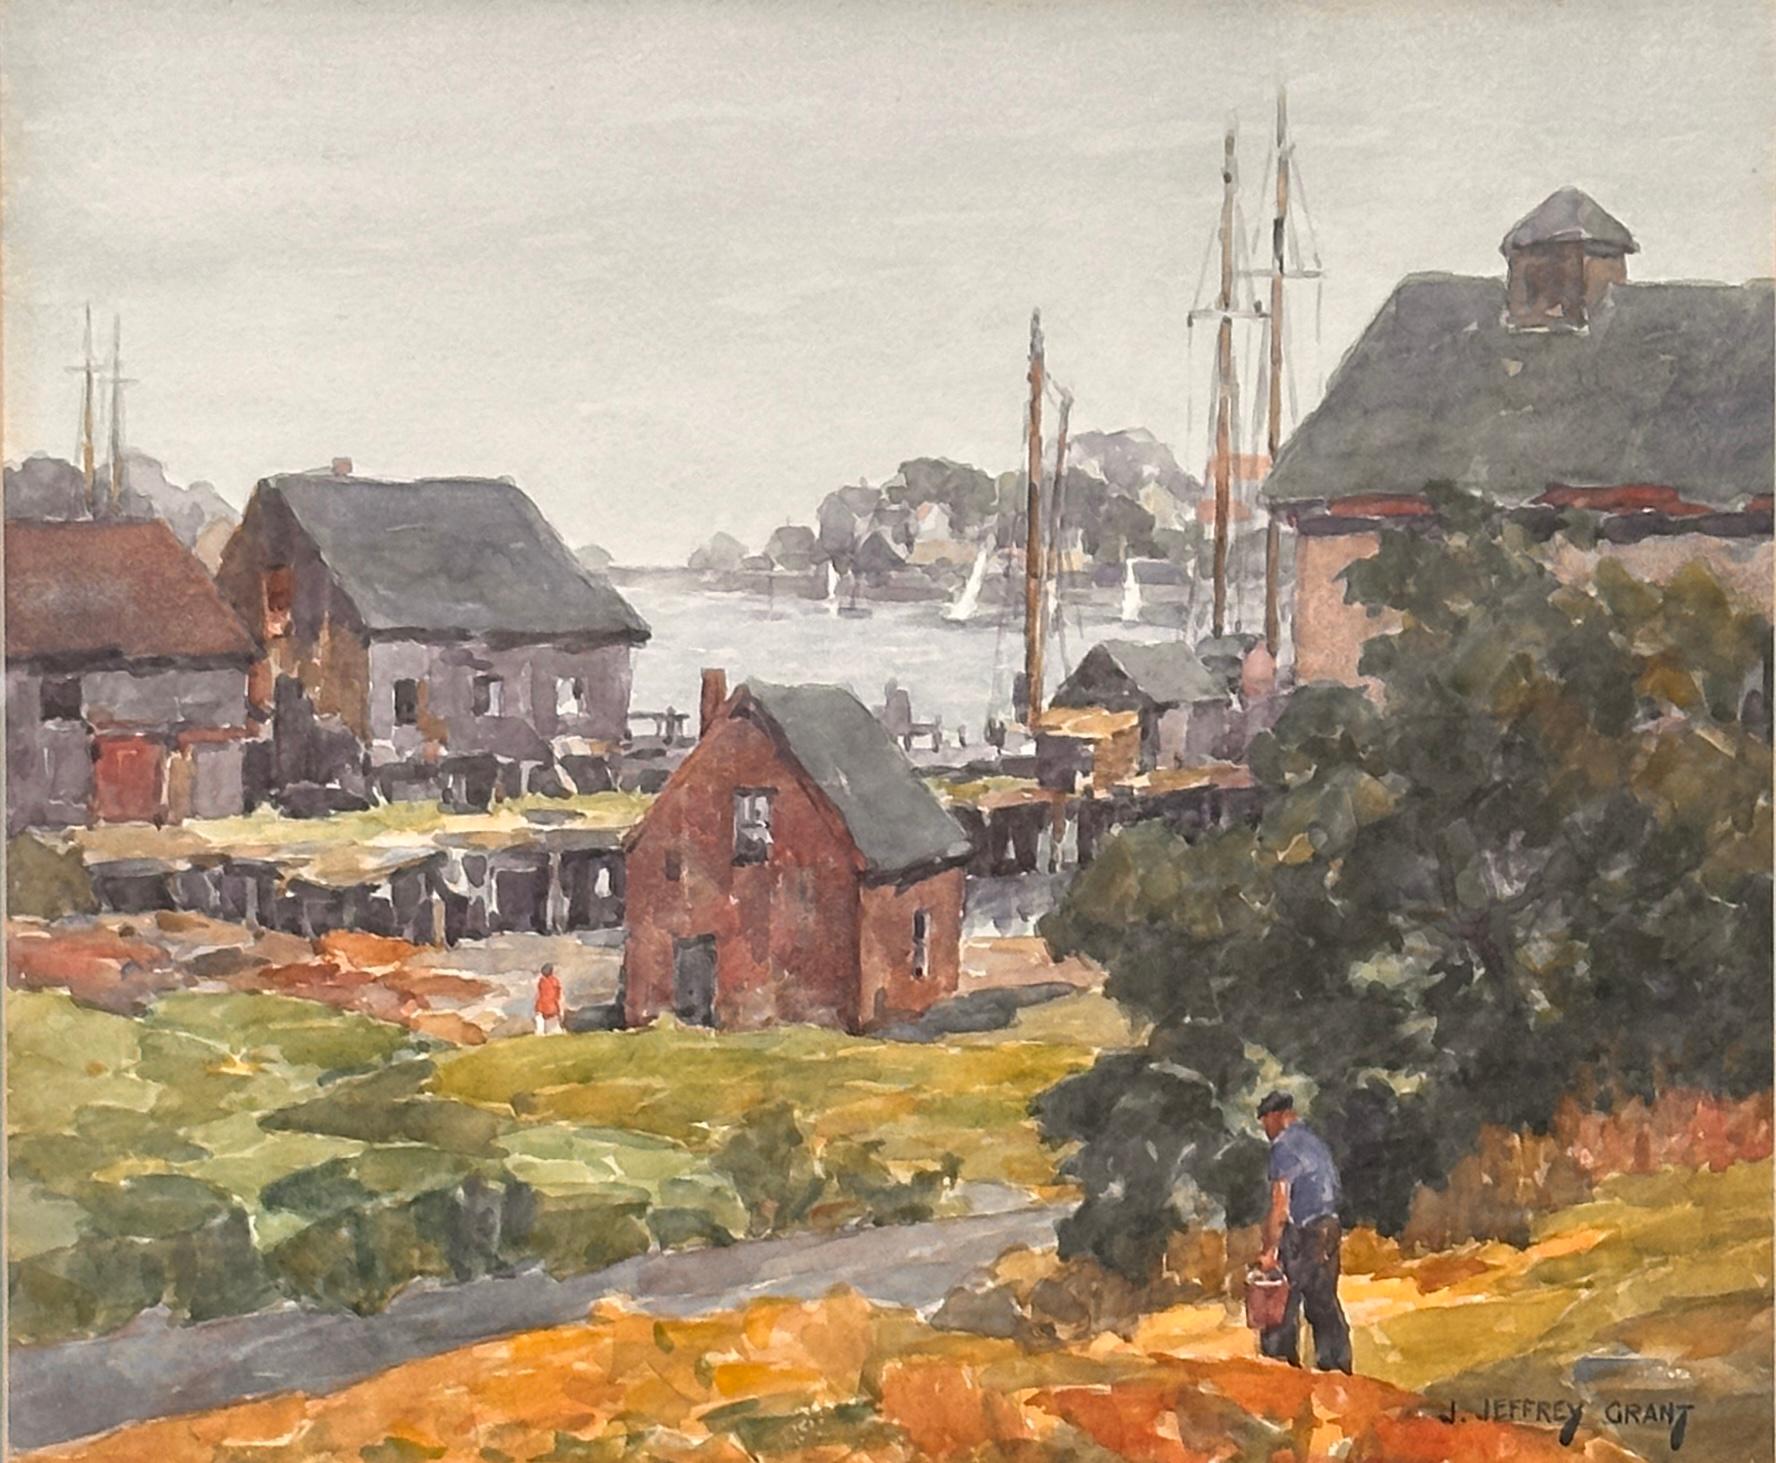 James Jeffrey Grant Landscape Art - "Gloucester Harbor, MA" - Painting done by Chicago based artist, James J. Grant